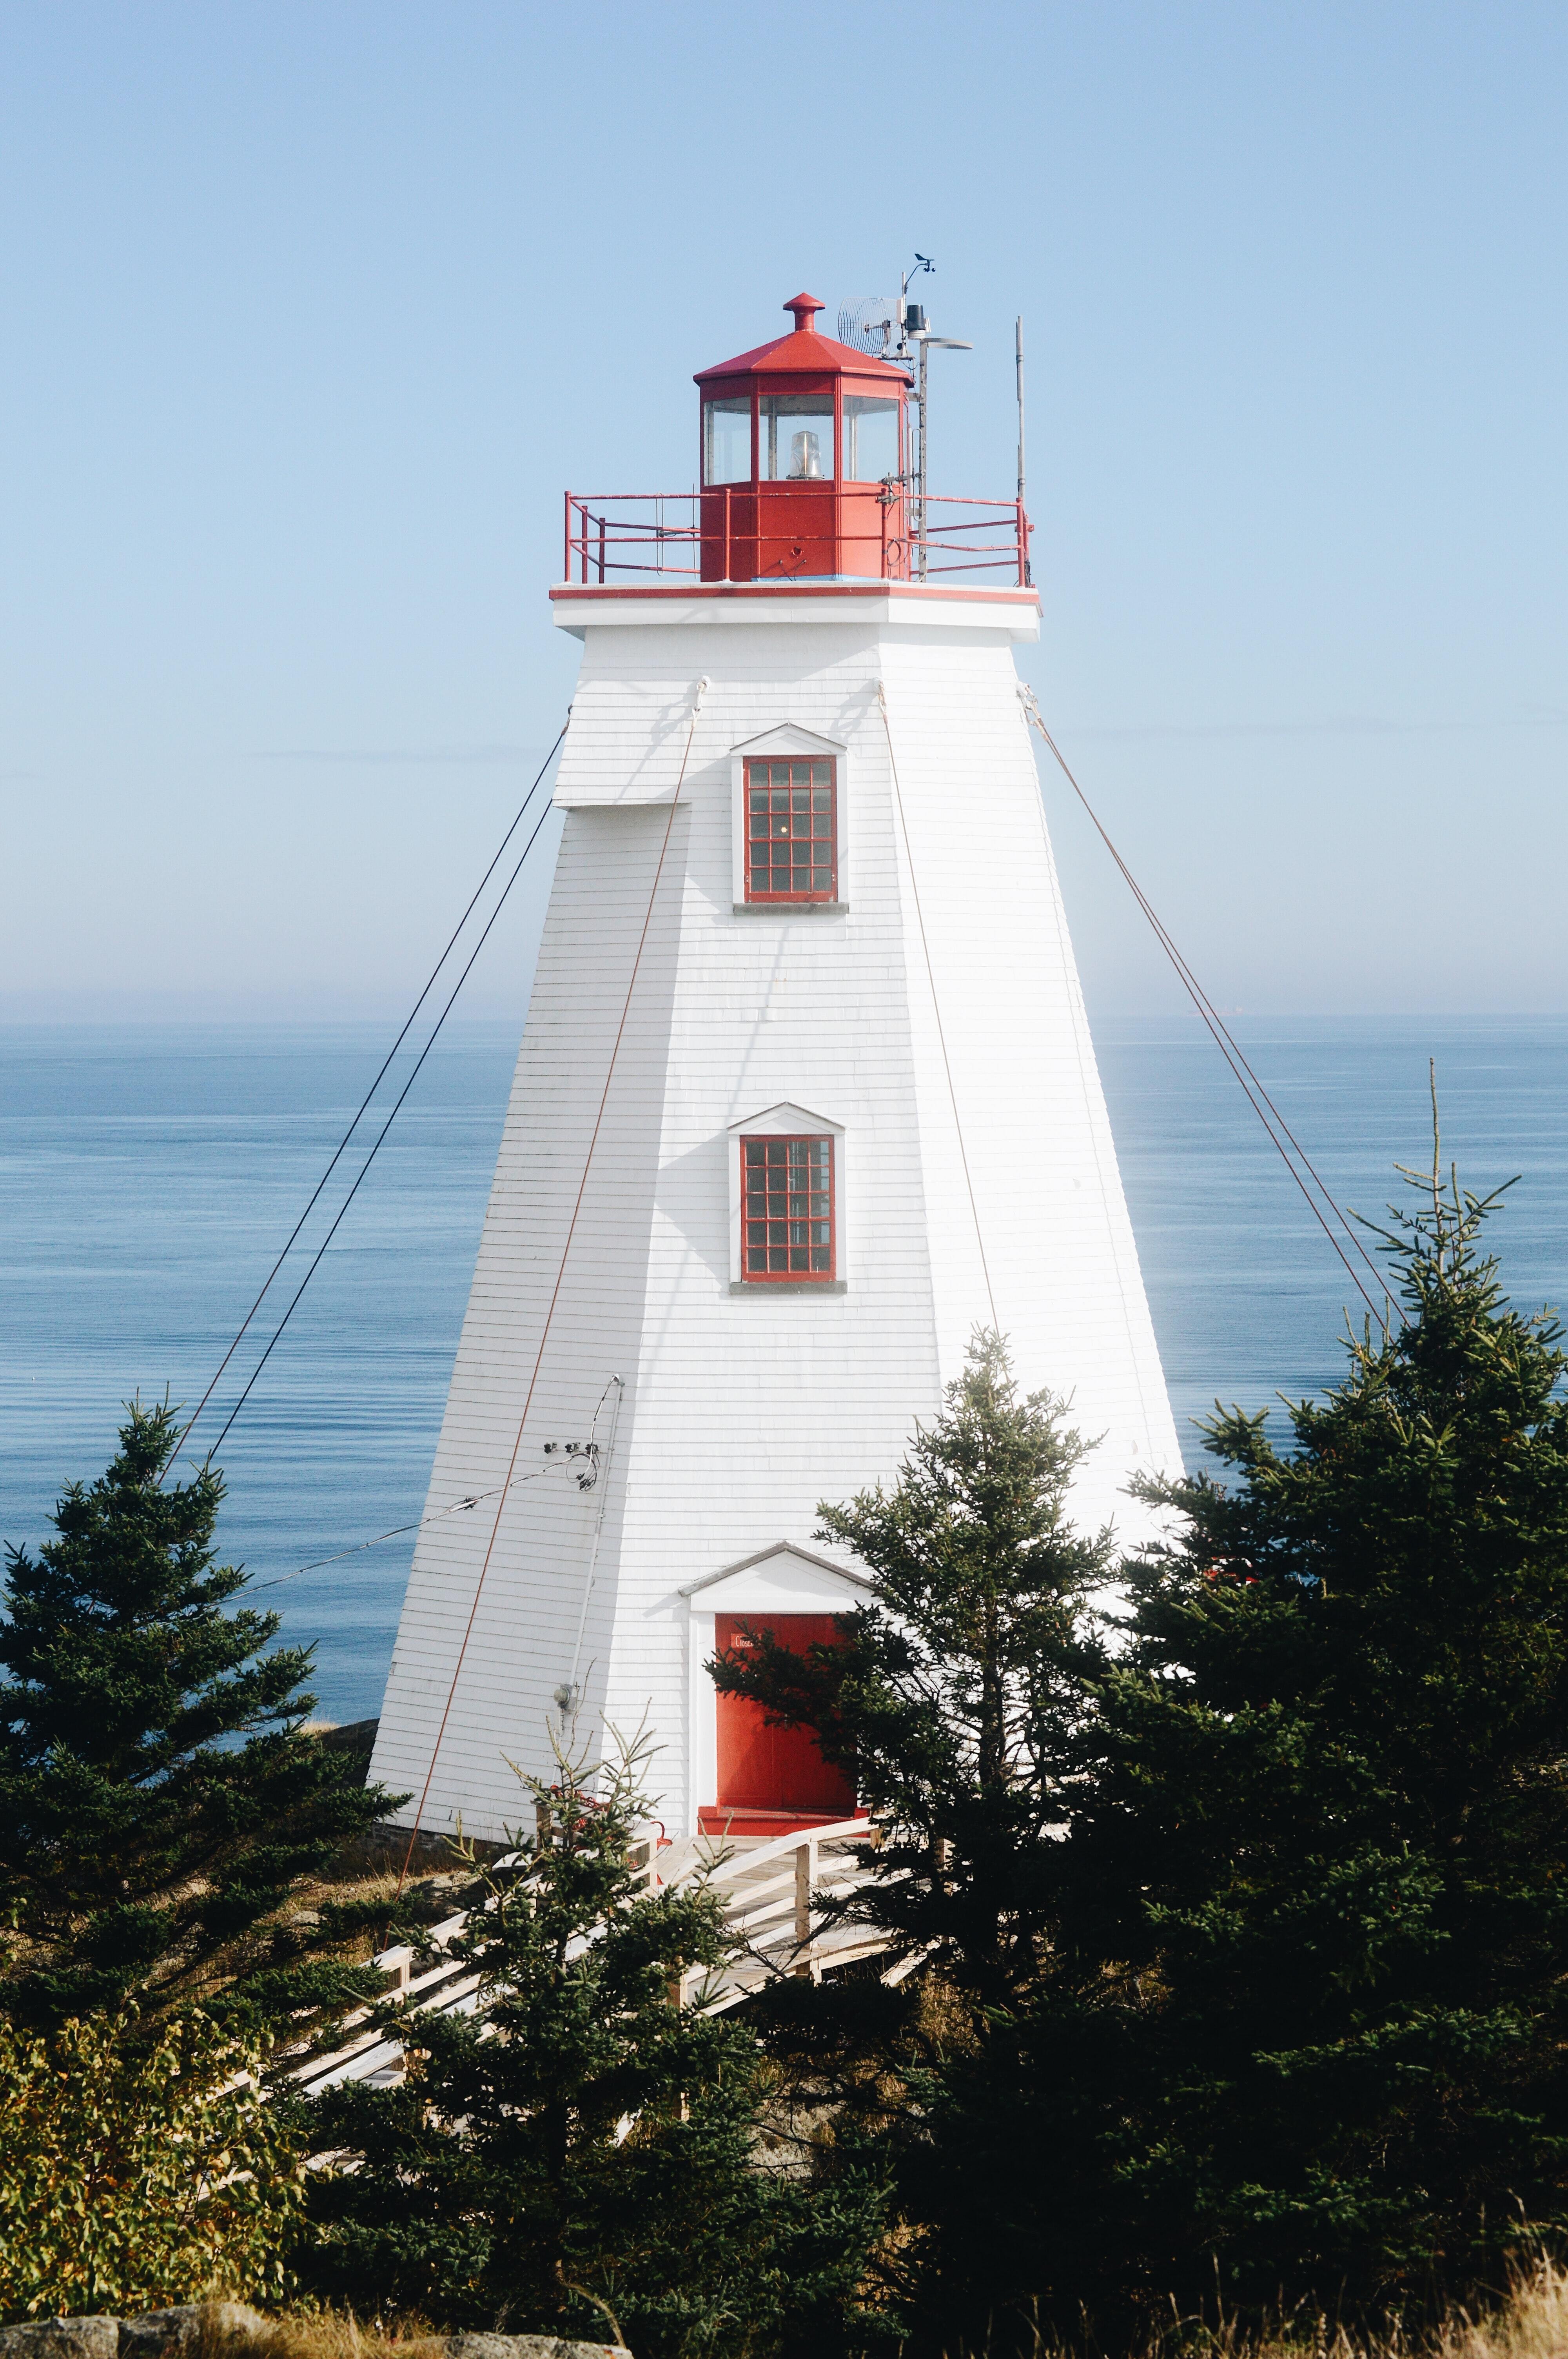 Swallowtail Lighthouse in New Brunswick